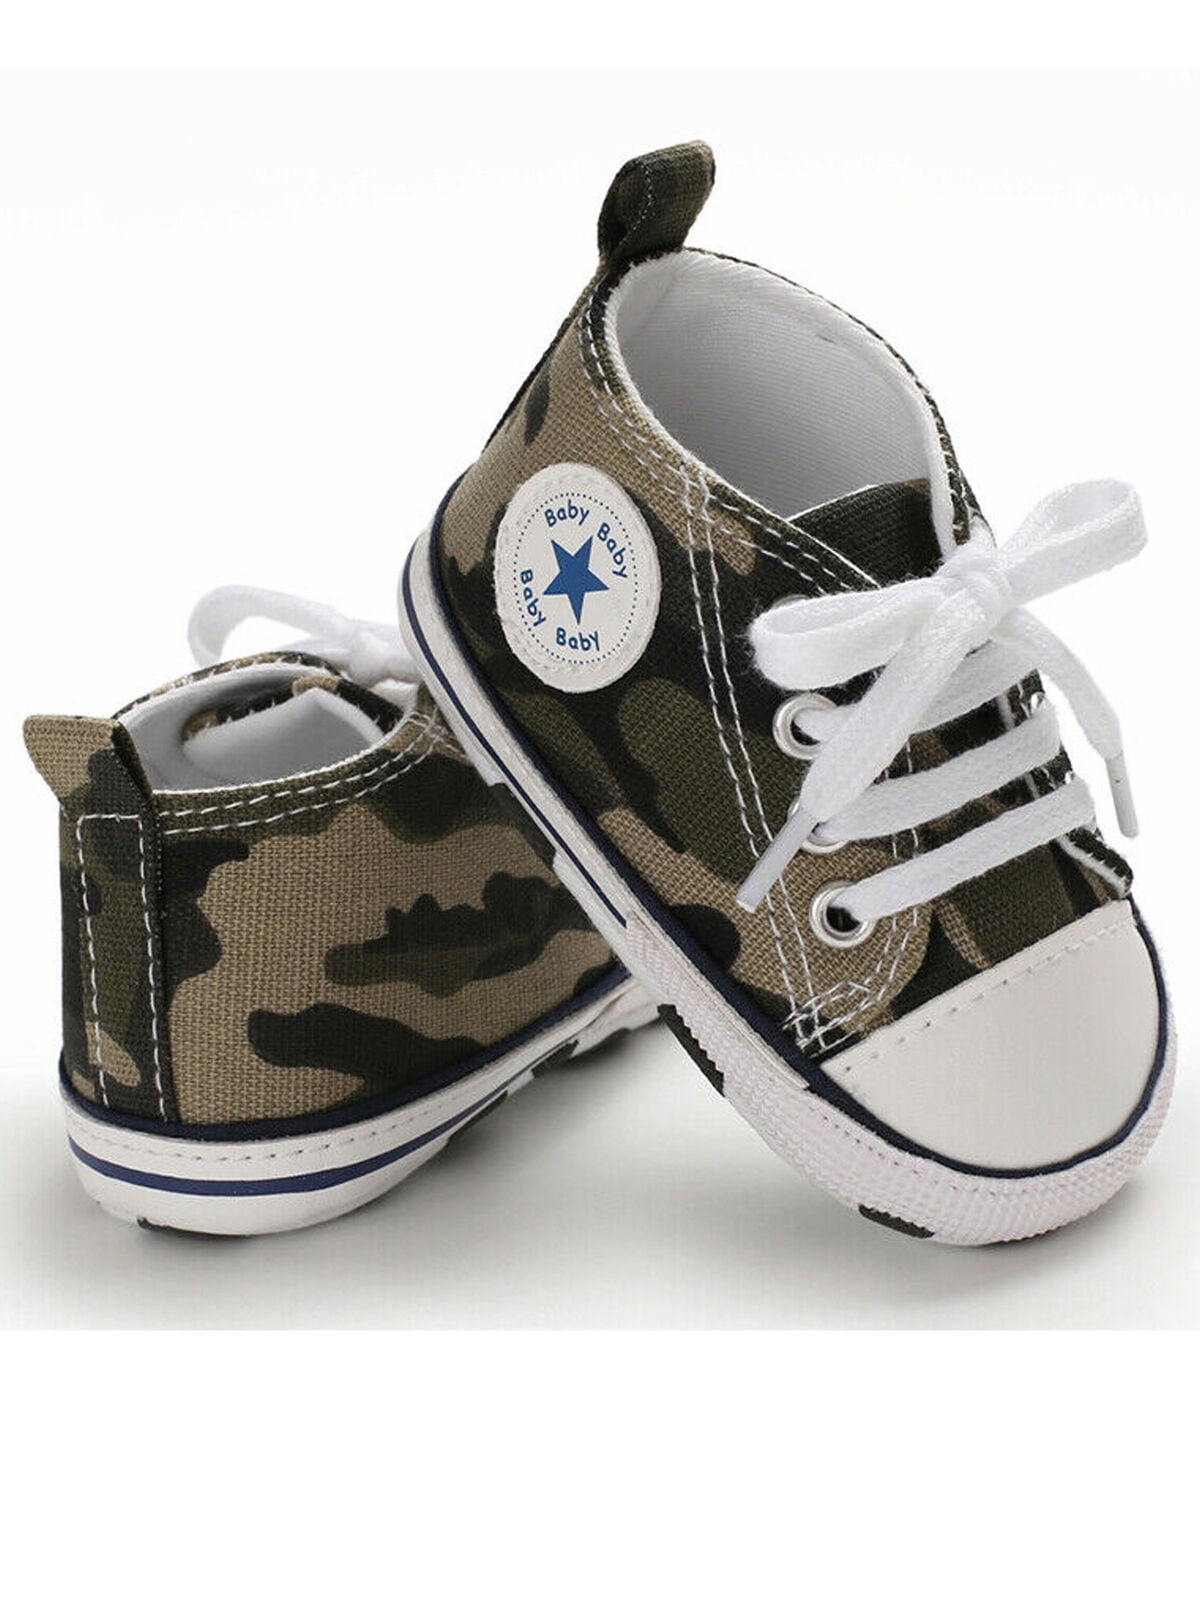 KIDSUN Unisex Baby Boy Girl Canvas Sneaker Soft Sole Ankle Infant First Walkers Crib Shoe 